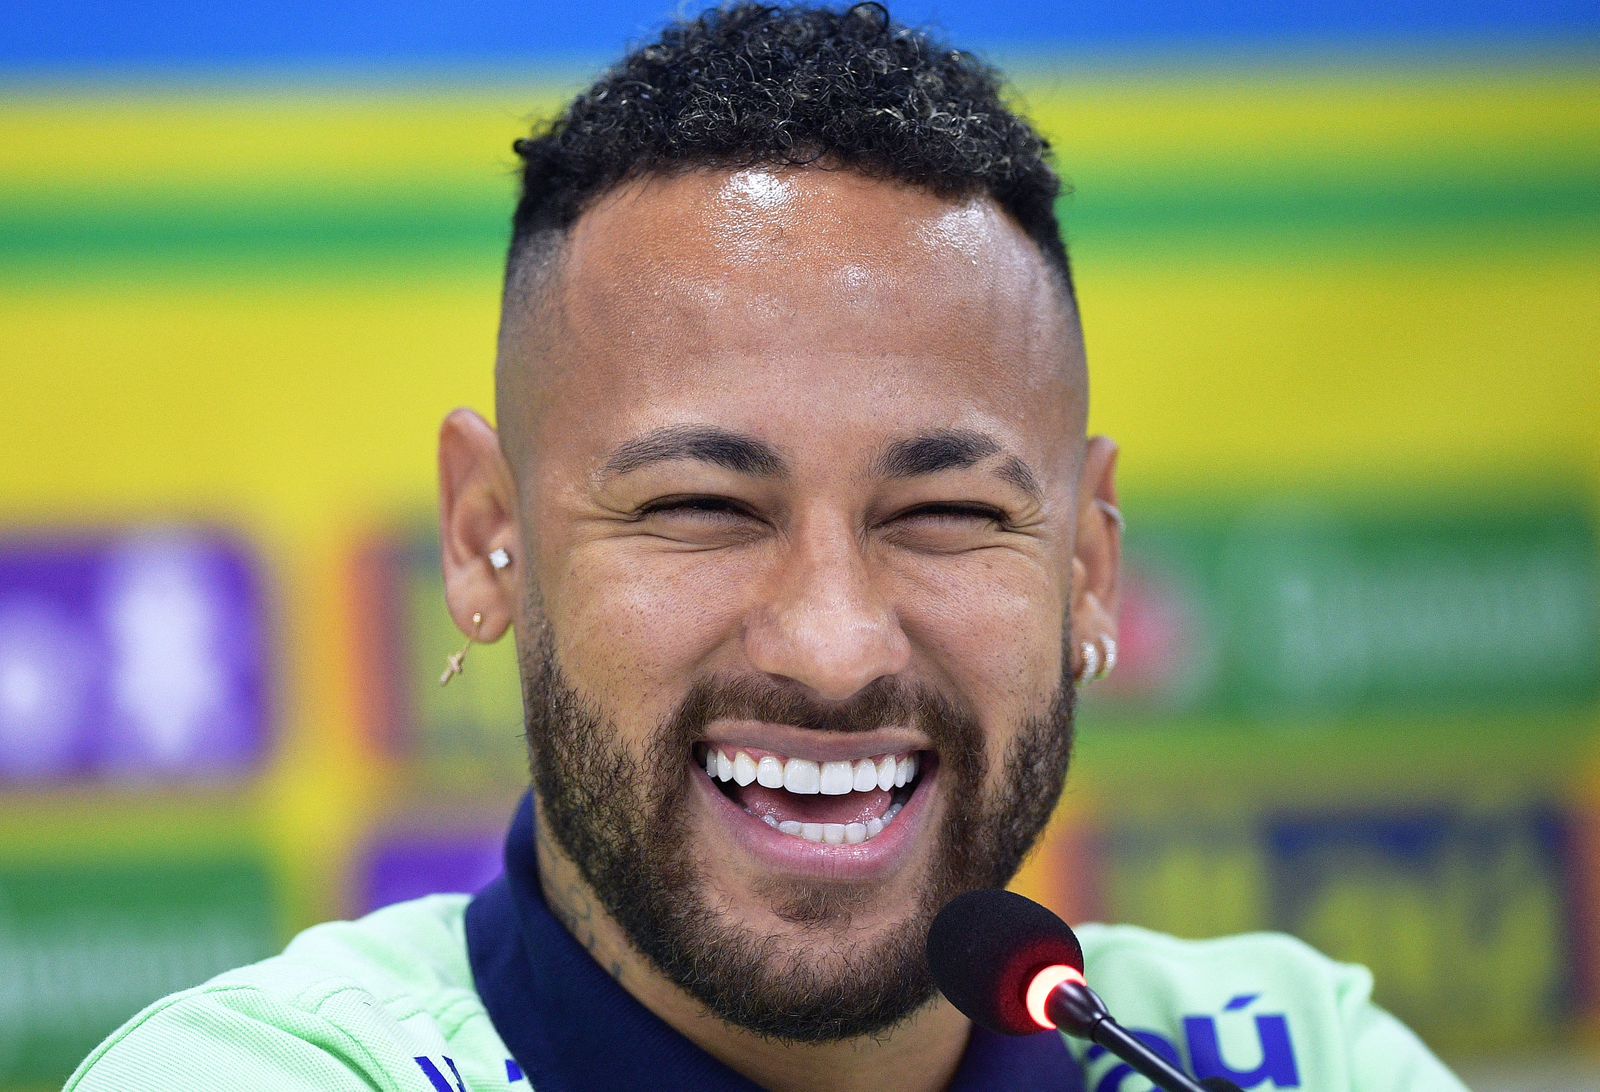 MC Poze brinca com Neymar (Photo by CARL DE SOUZA/AFP via Getty Images)